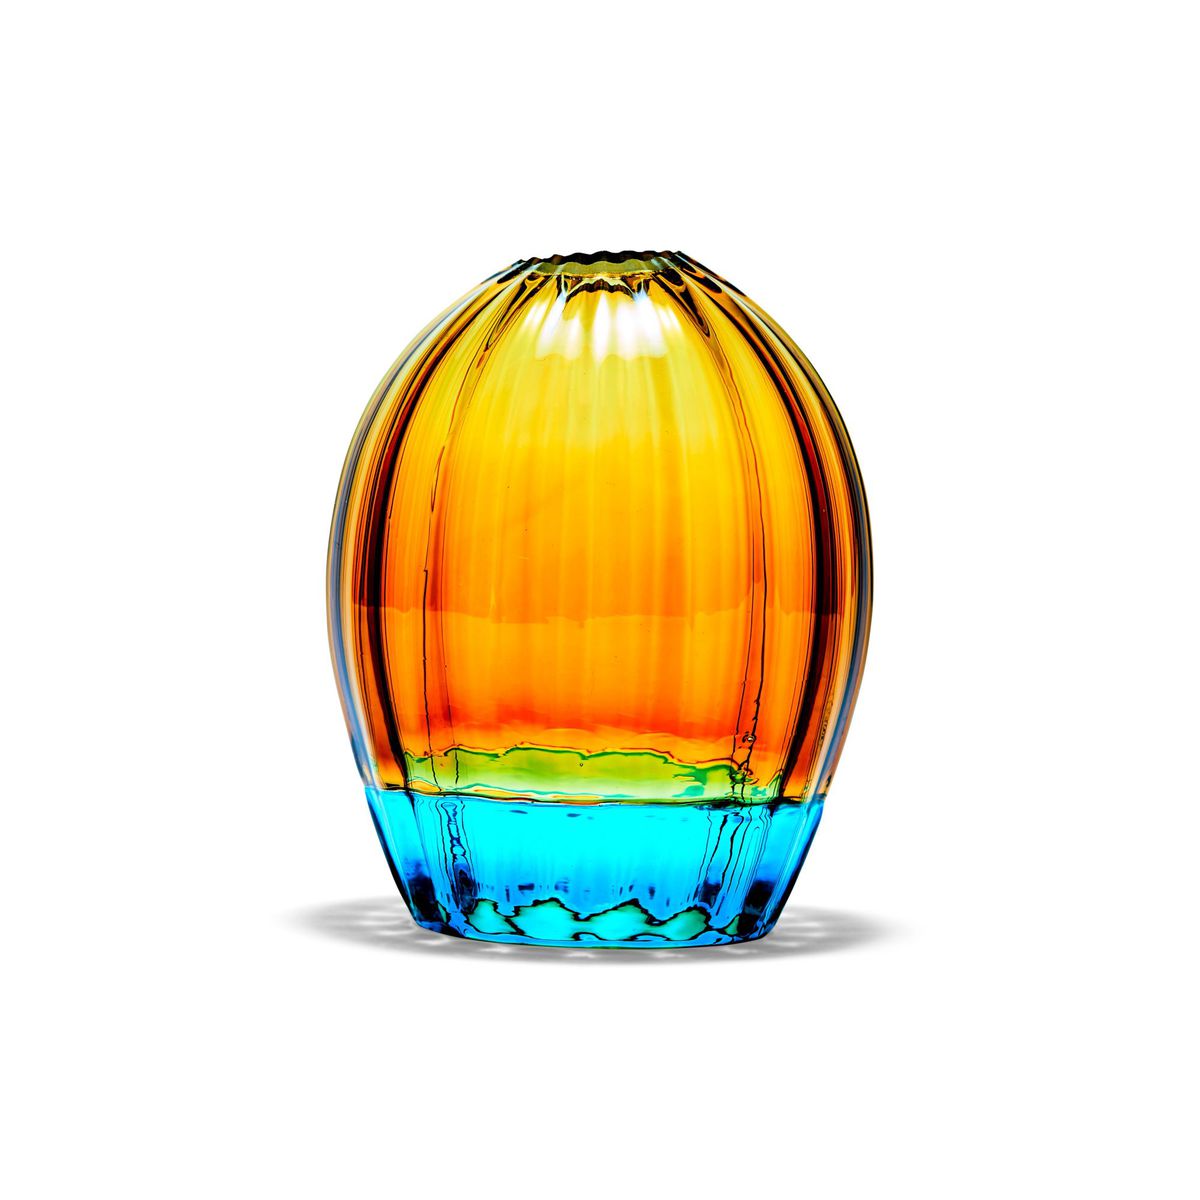 Orange and blue blown glass pendant by Kathryn Adams